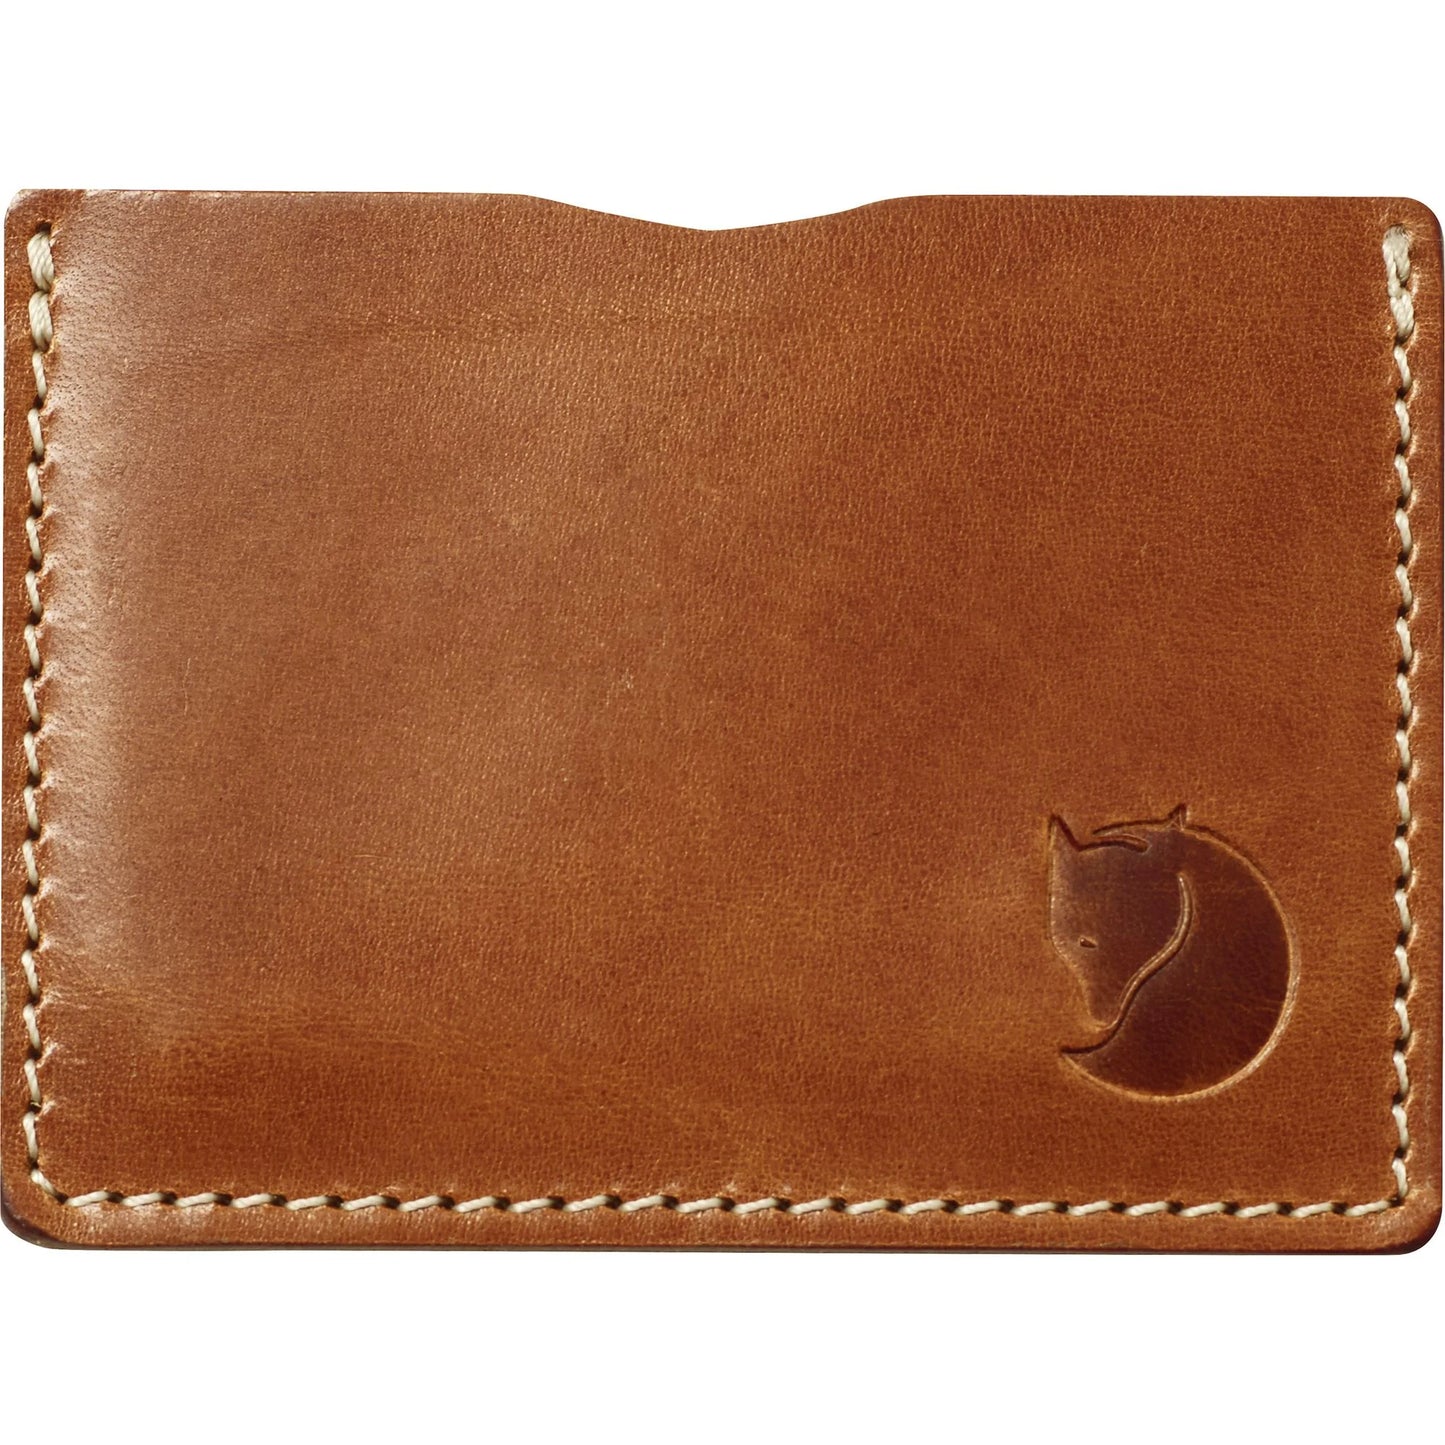 Fjallraven 狐狸袋 Ovik Leather Card Holder 瑞典製植鞣牛皮卡套  Cognac 77308-249